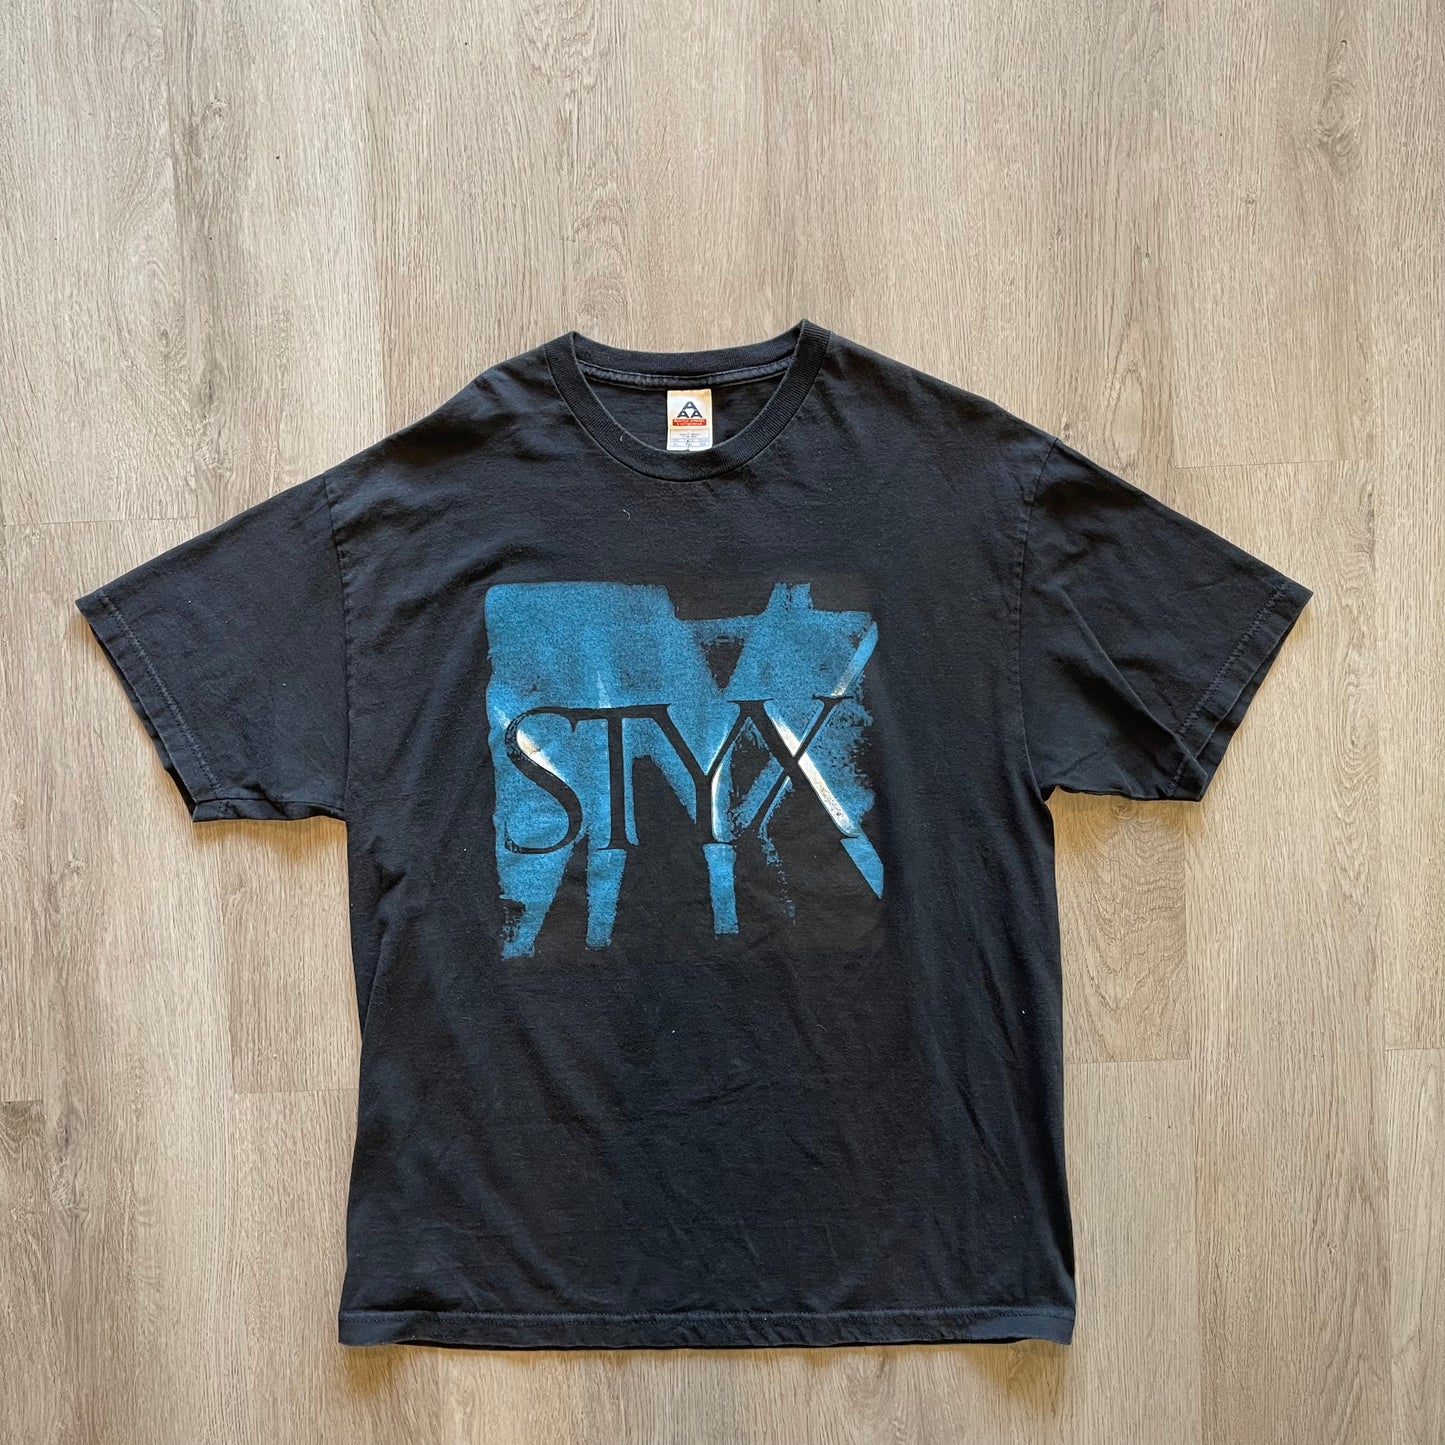 Vintage Styx T-shirt